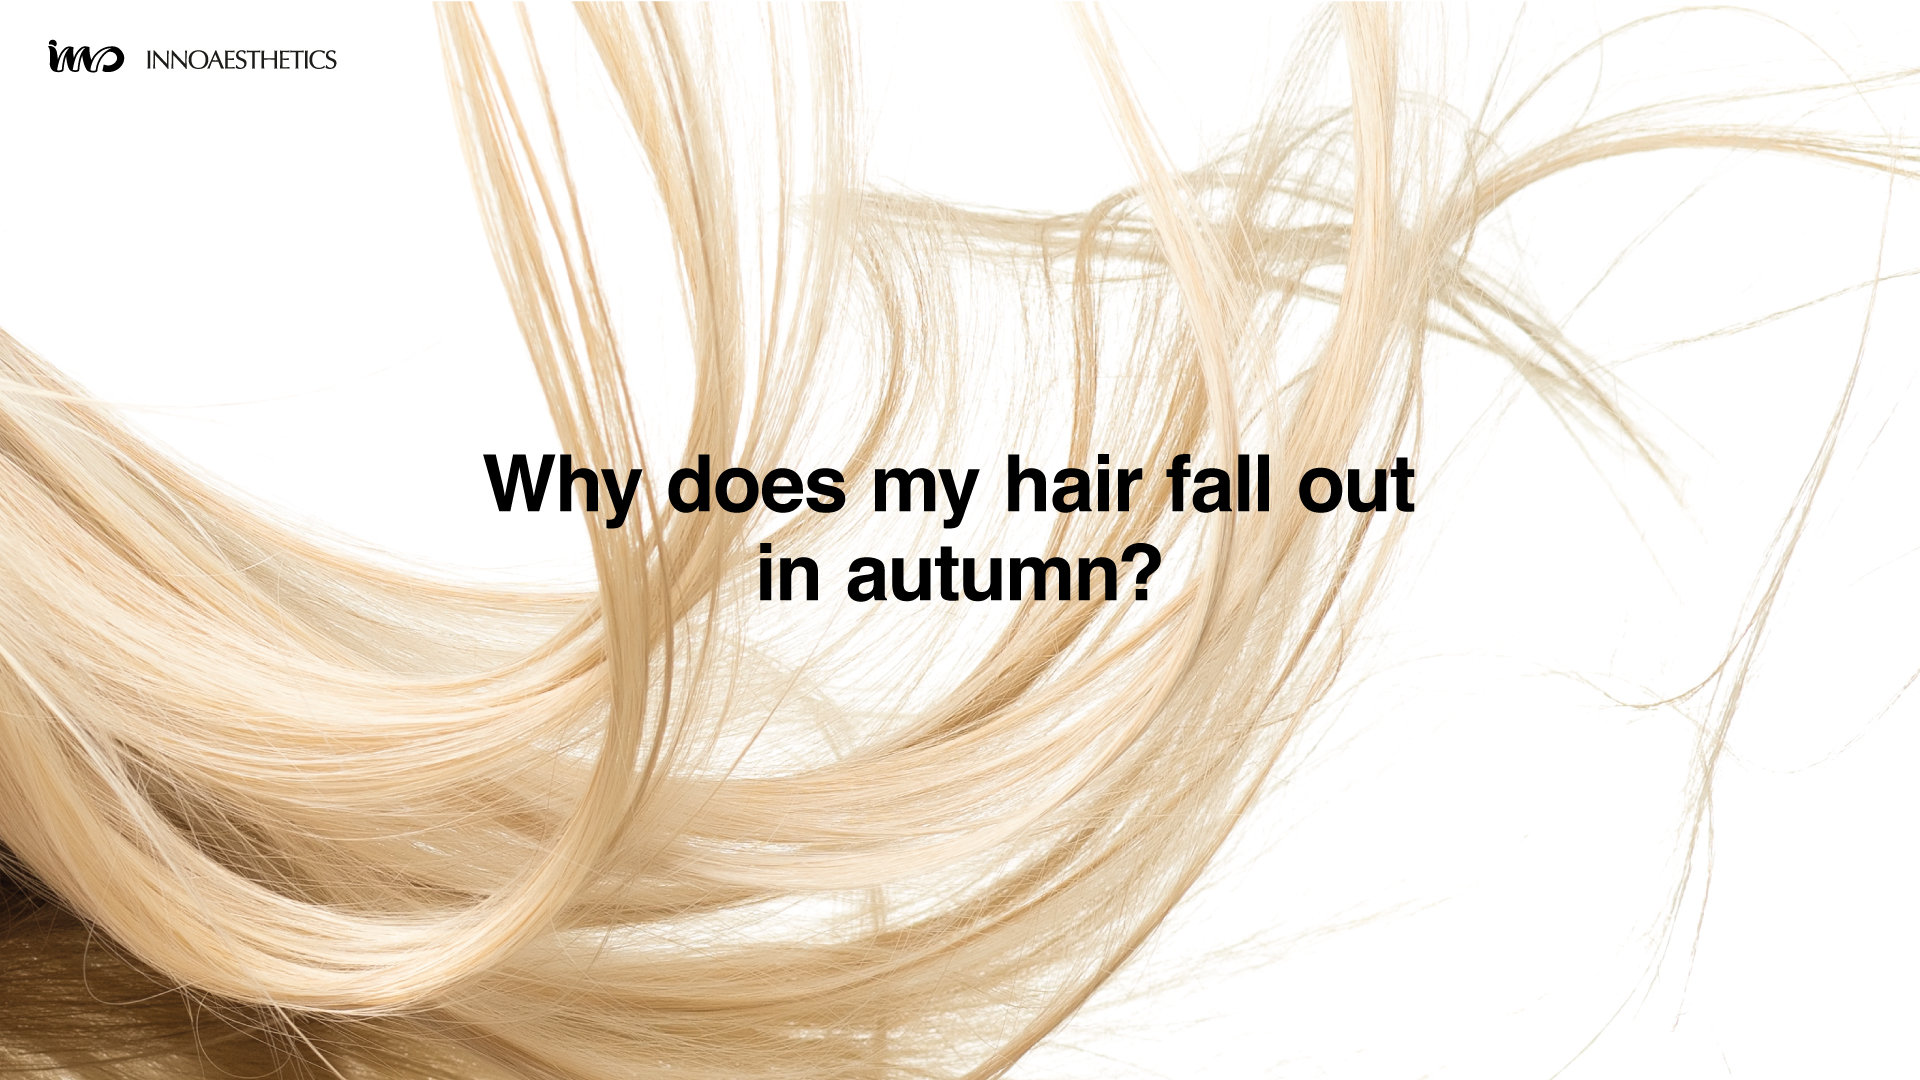 SEASONAL HAIR LOSS: WHY DOES MY HAIR FALL OUT IN AUTUMN? - INNOAESTHETICS